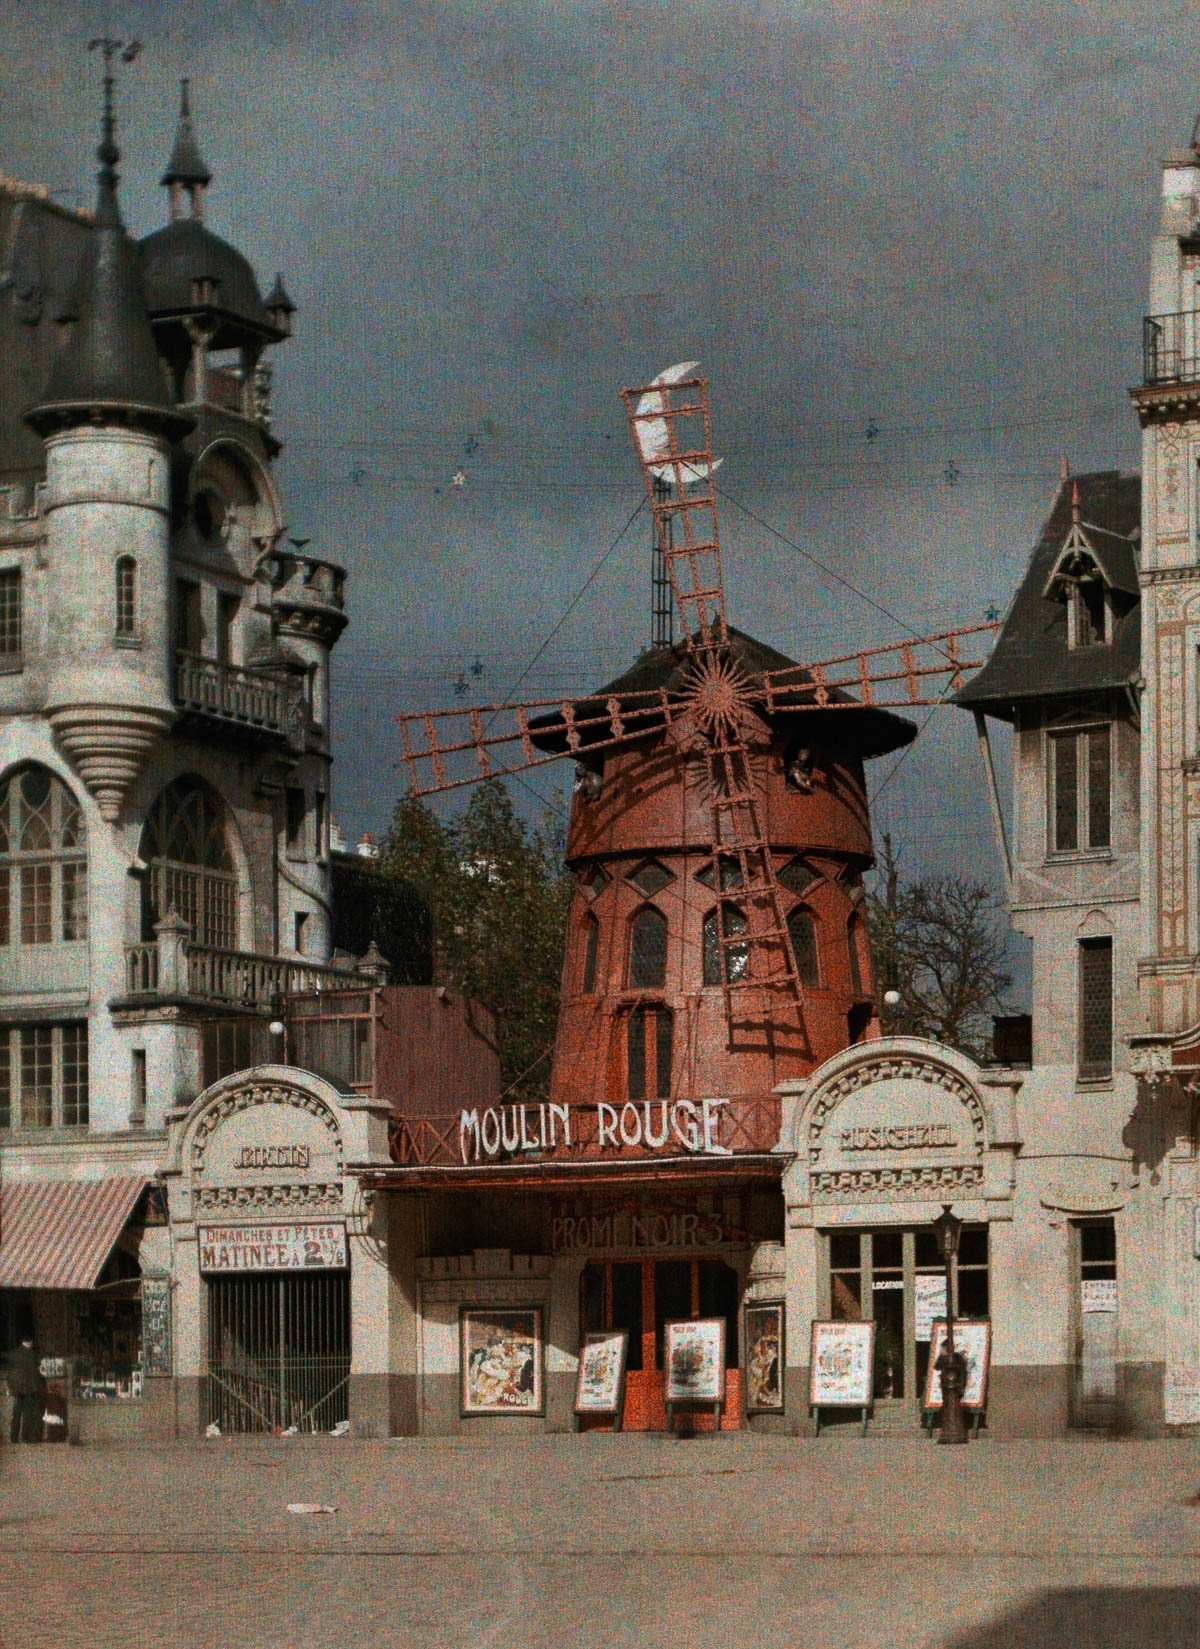 The Moulin Rouge nightclub at Montmarte, Paris, captured in 1923.